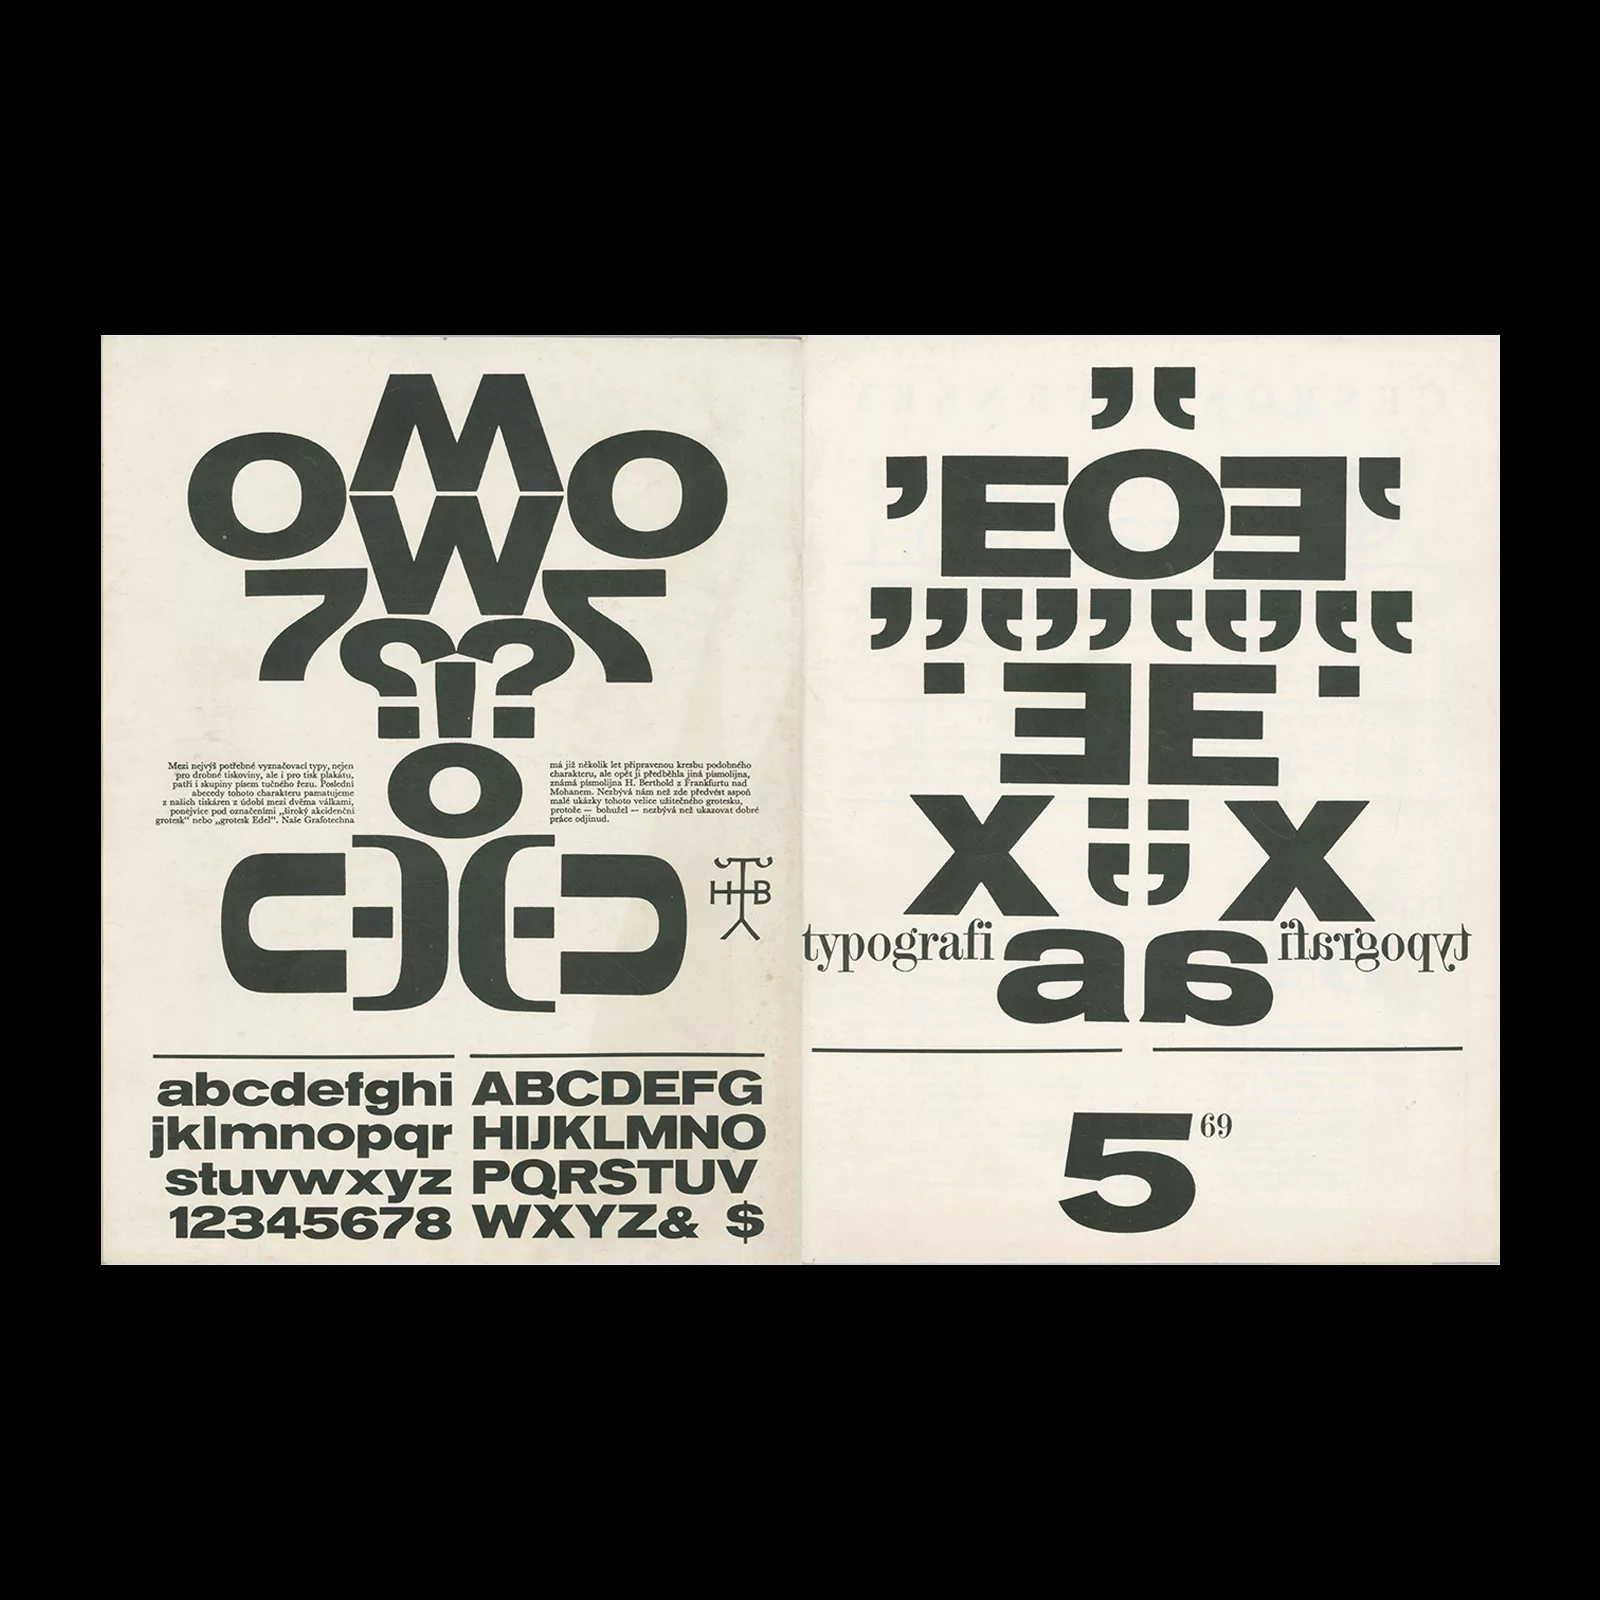 Typografia, ročník 72, 5, 1969. Cover design by Karel Šejna